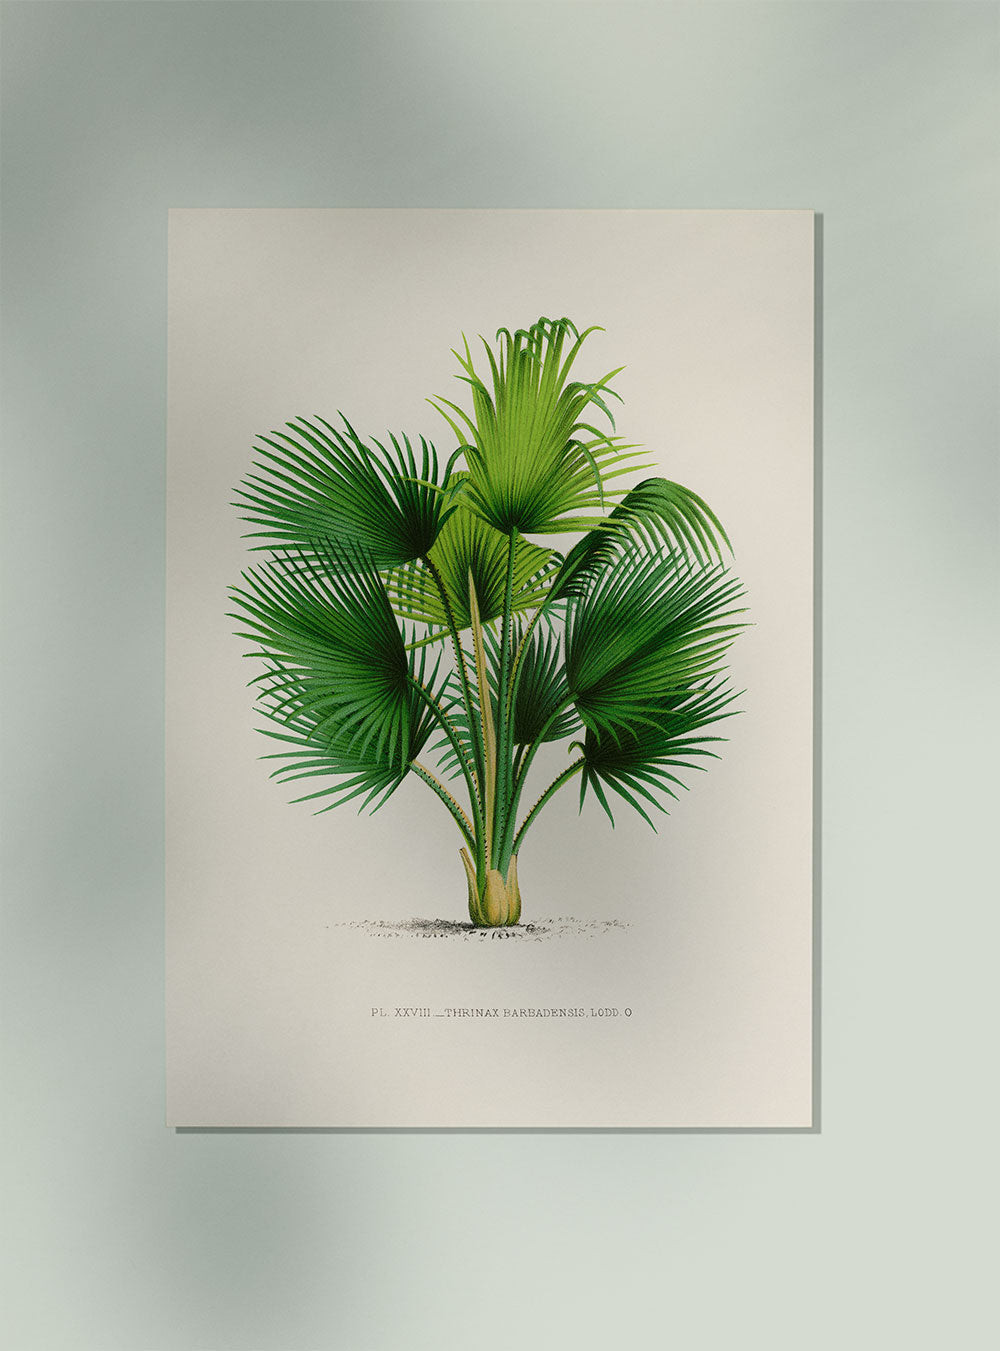 Thrinax Palm Tree Art Print by Pieter Joseph de Pannemaeker